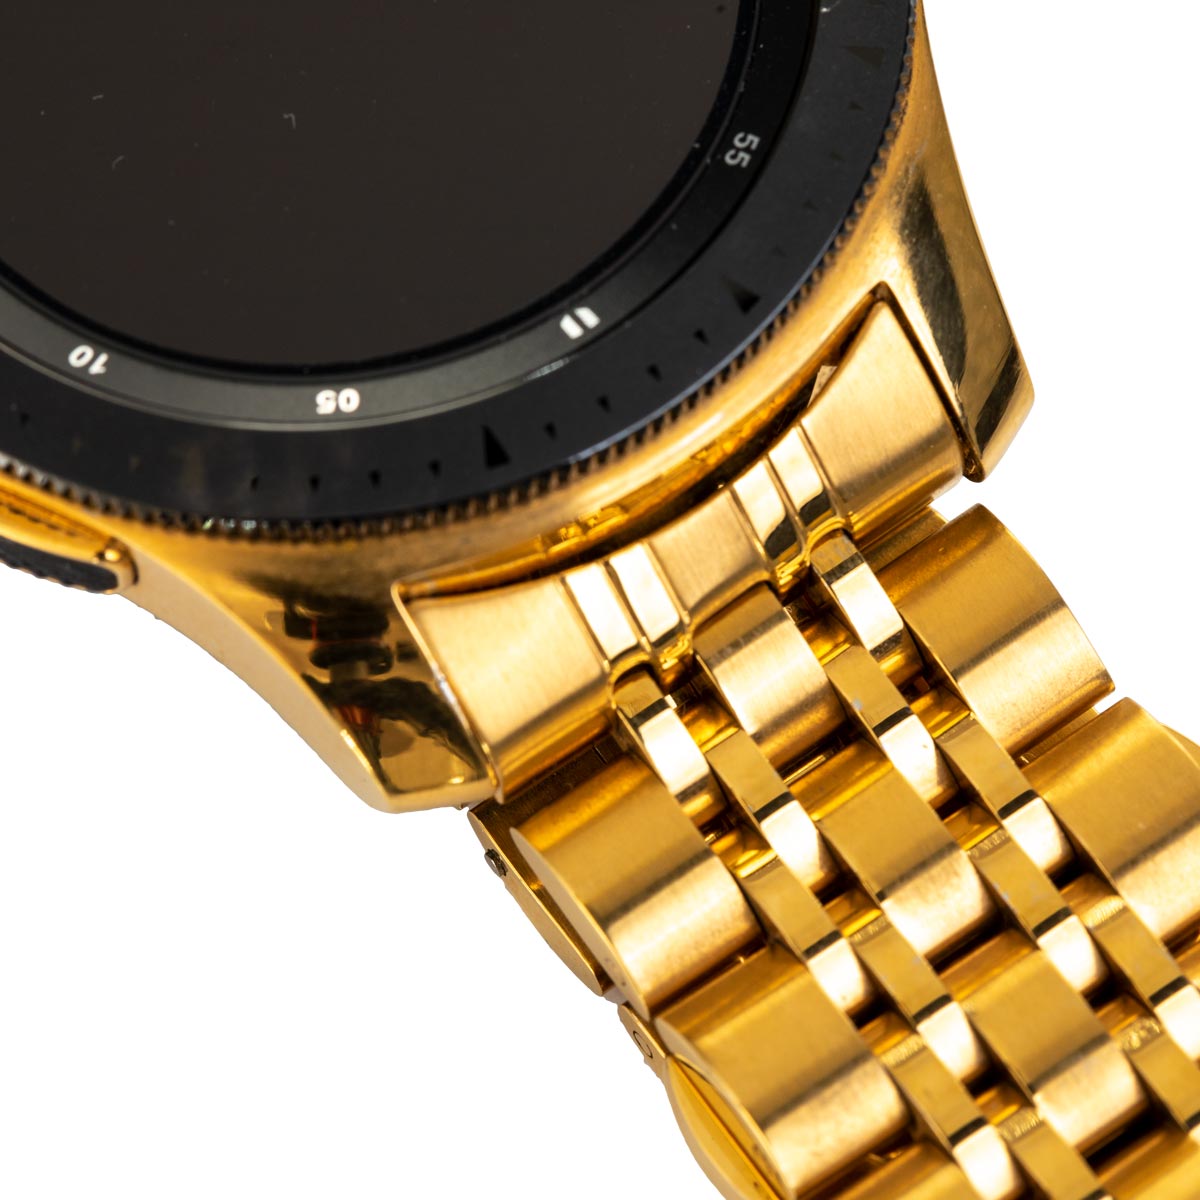 Galaxy watch золото. Samsung Galaxy watch 3 золото. Samsung watch 1 золото. Смарт часы самсунг золотые. Samsung Galaxy watch золотистый.